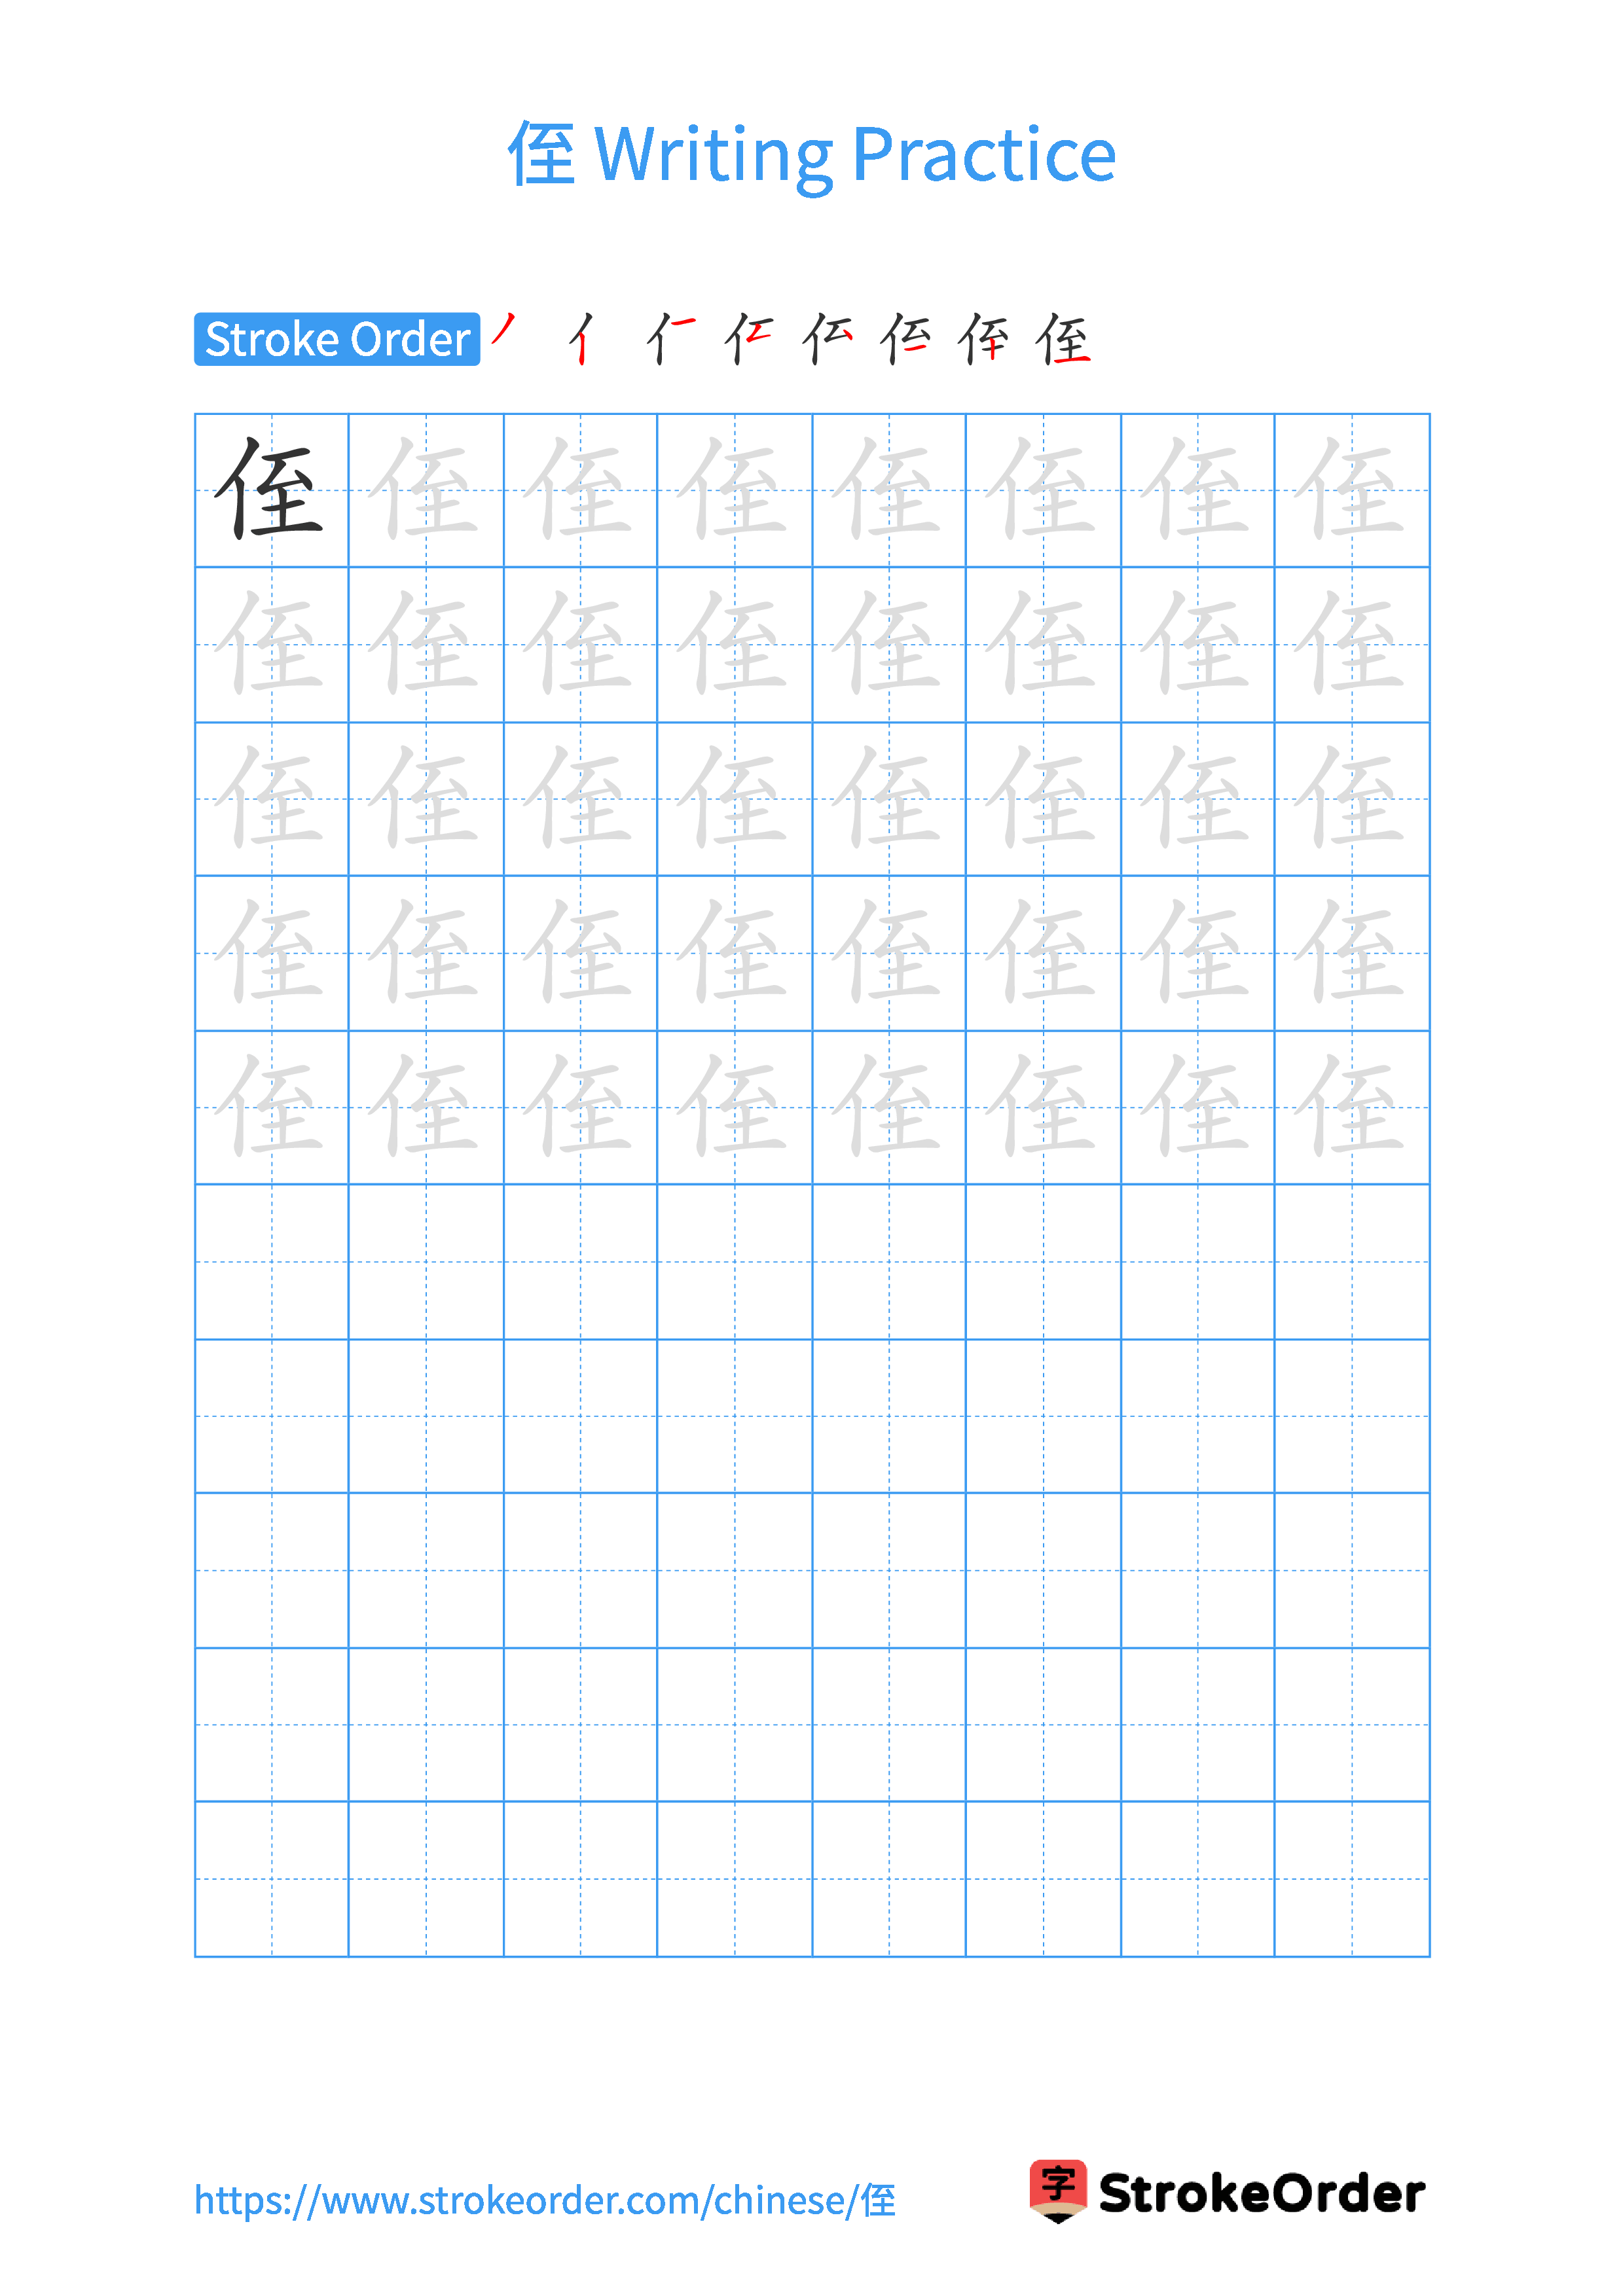 Printable Handwriting Practice Worksheet of the Chinese character 侄 in Portrait Orientation (Tian Zi Ge)